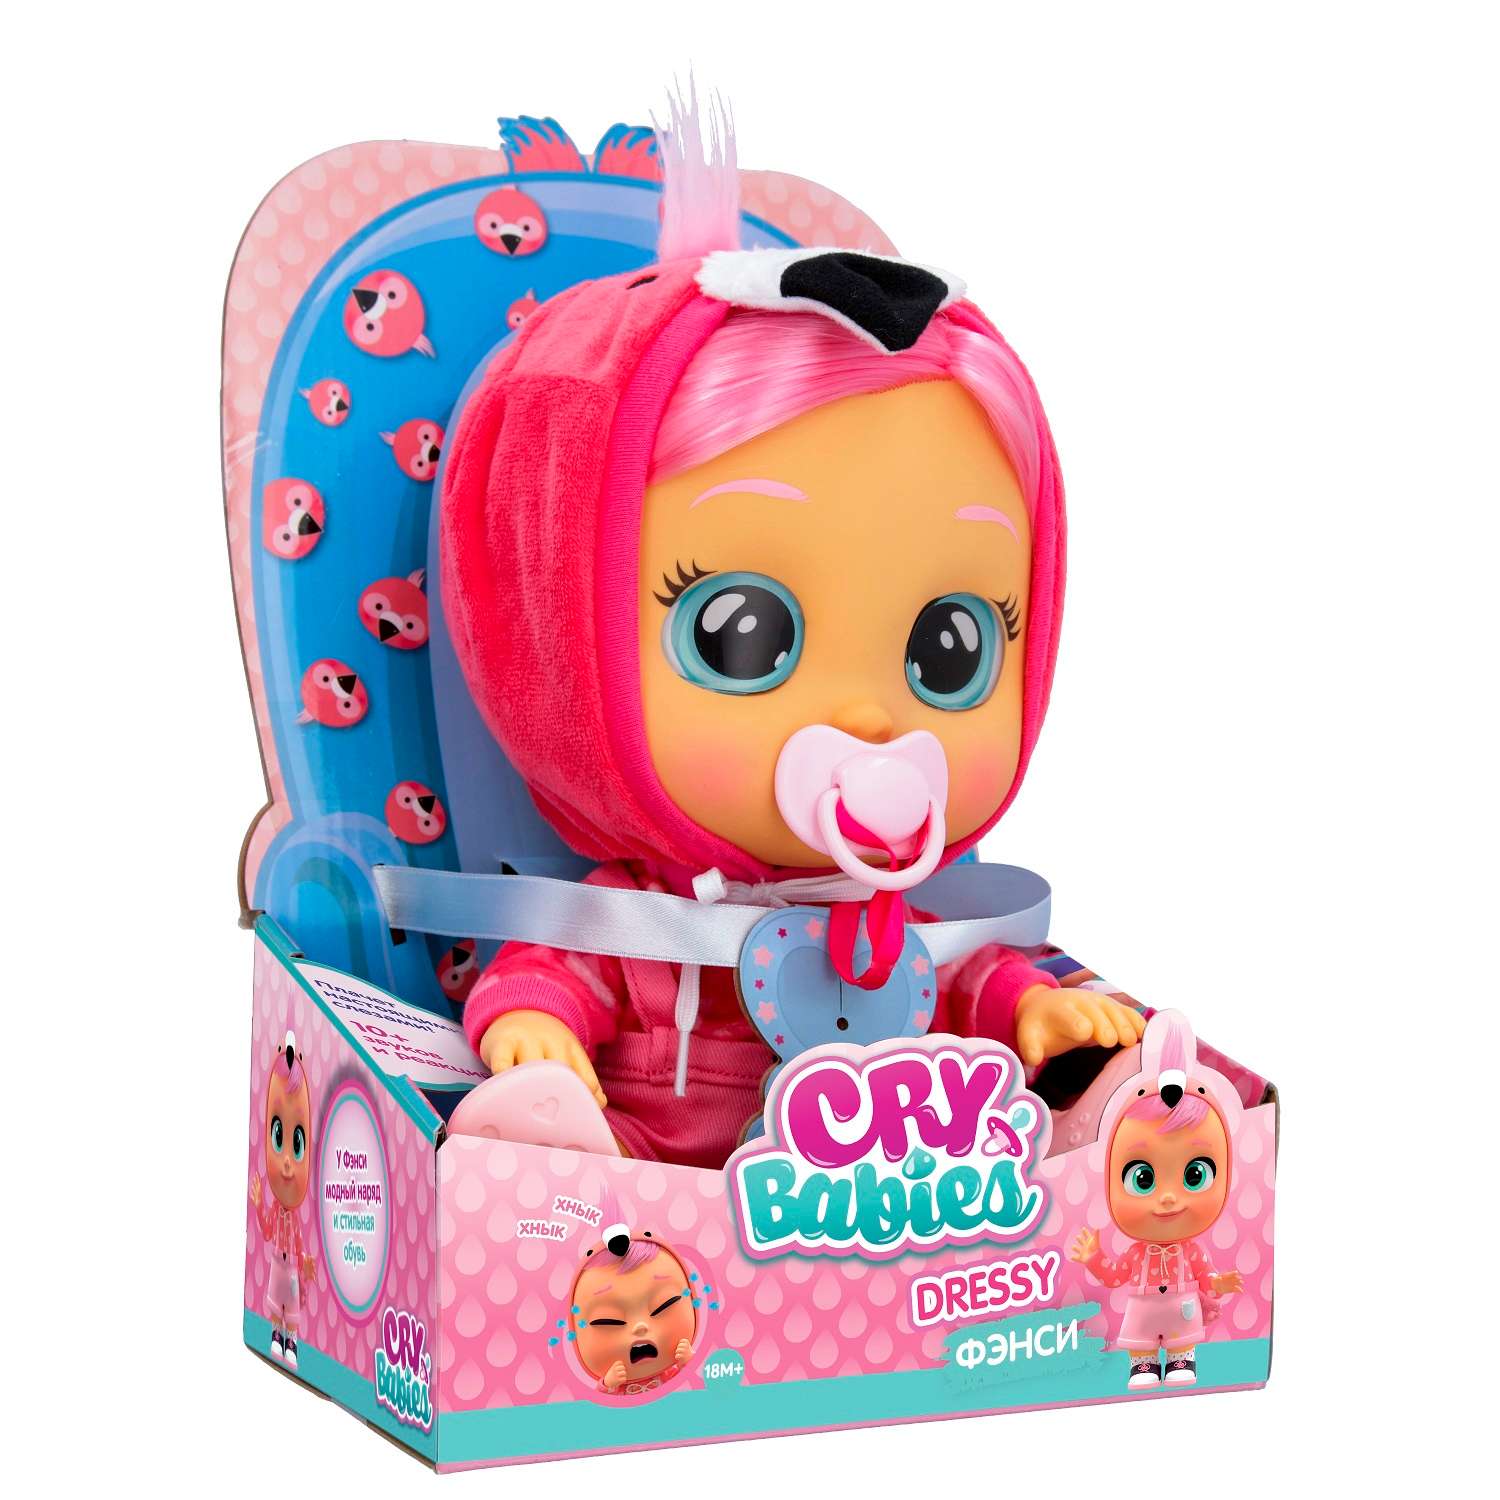 Кукла Cry Babies Dressy Фэнси интерактивная 40886 40886 - фото 3